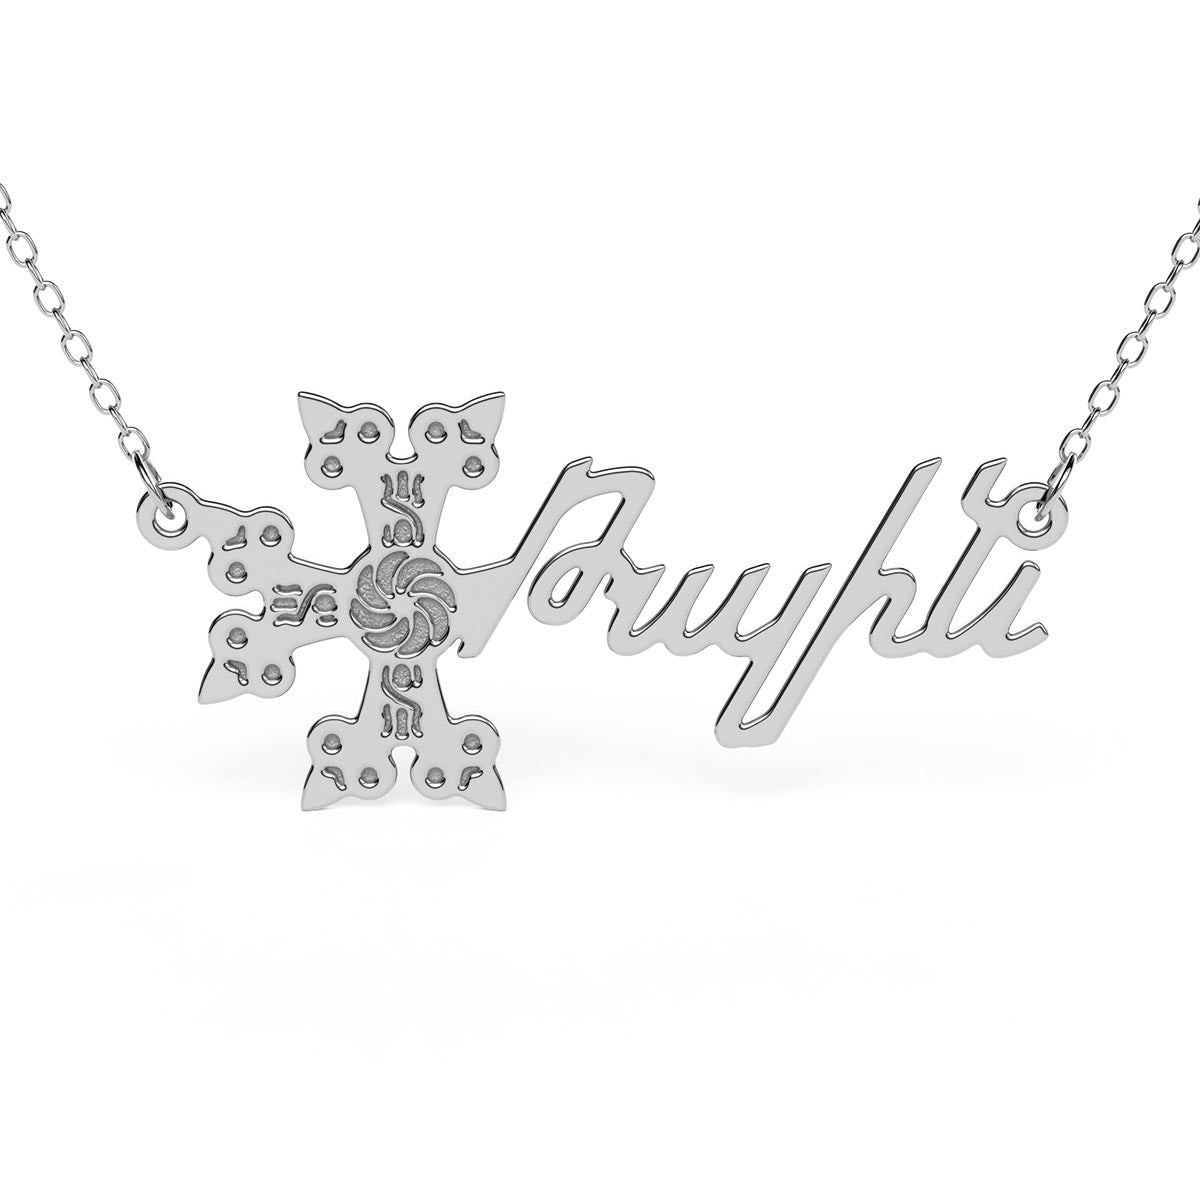 Sideways Cross Armenian Name Necklace